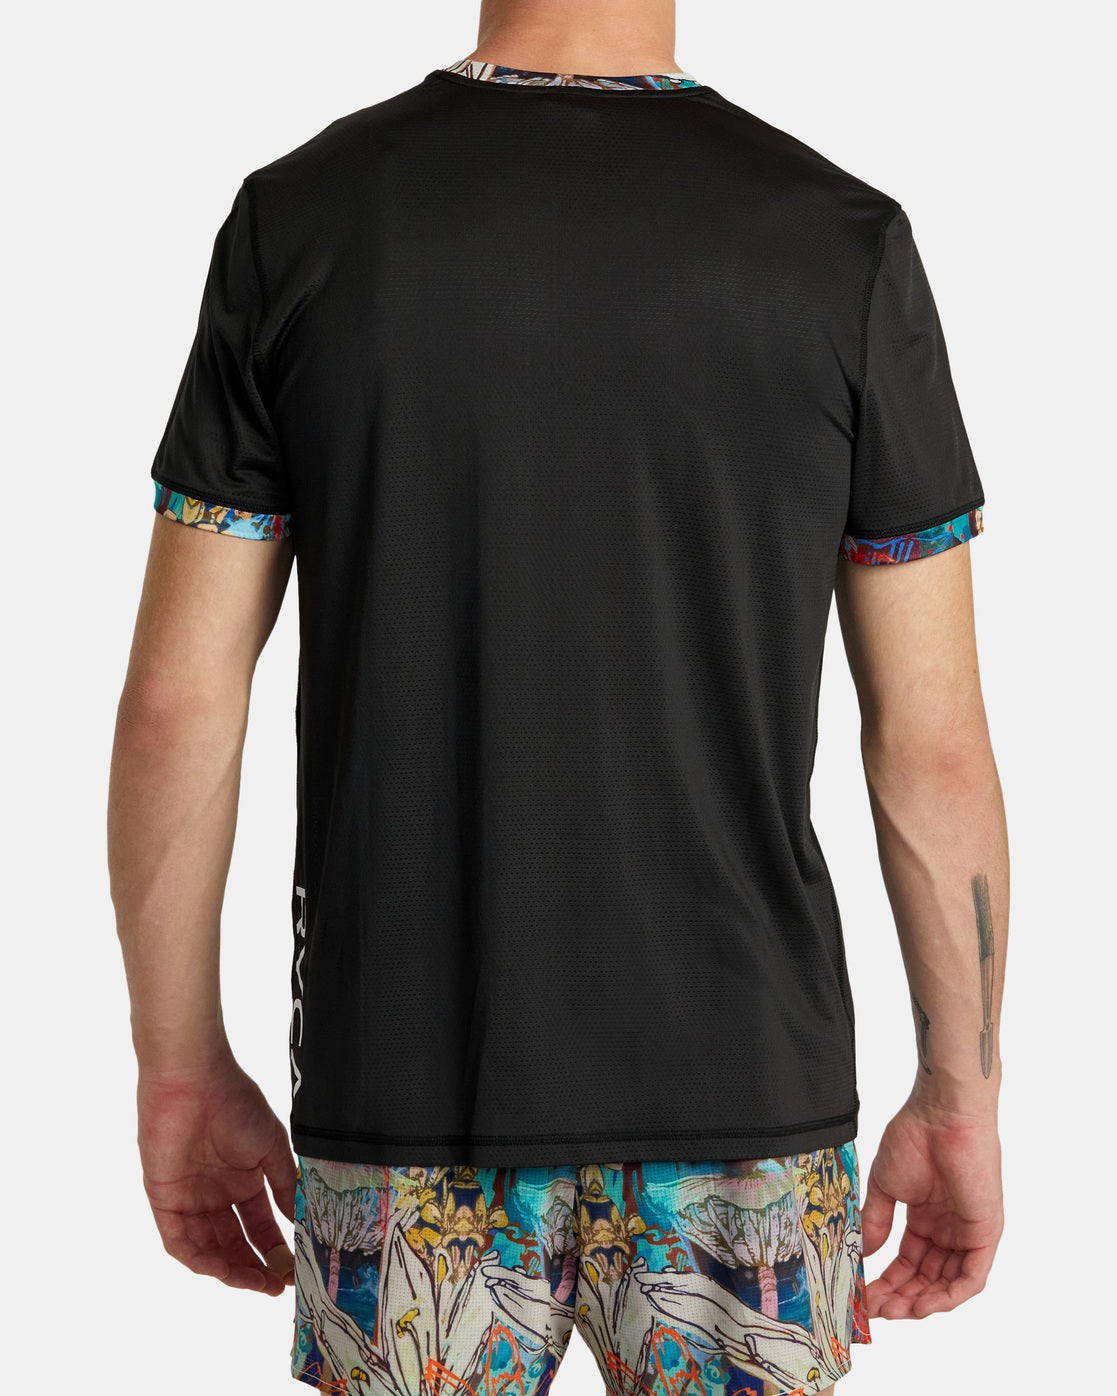 Sage Vaughn x RVCA Runner Technisches T-Shirt – Schwarz